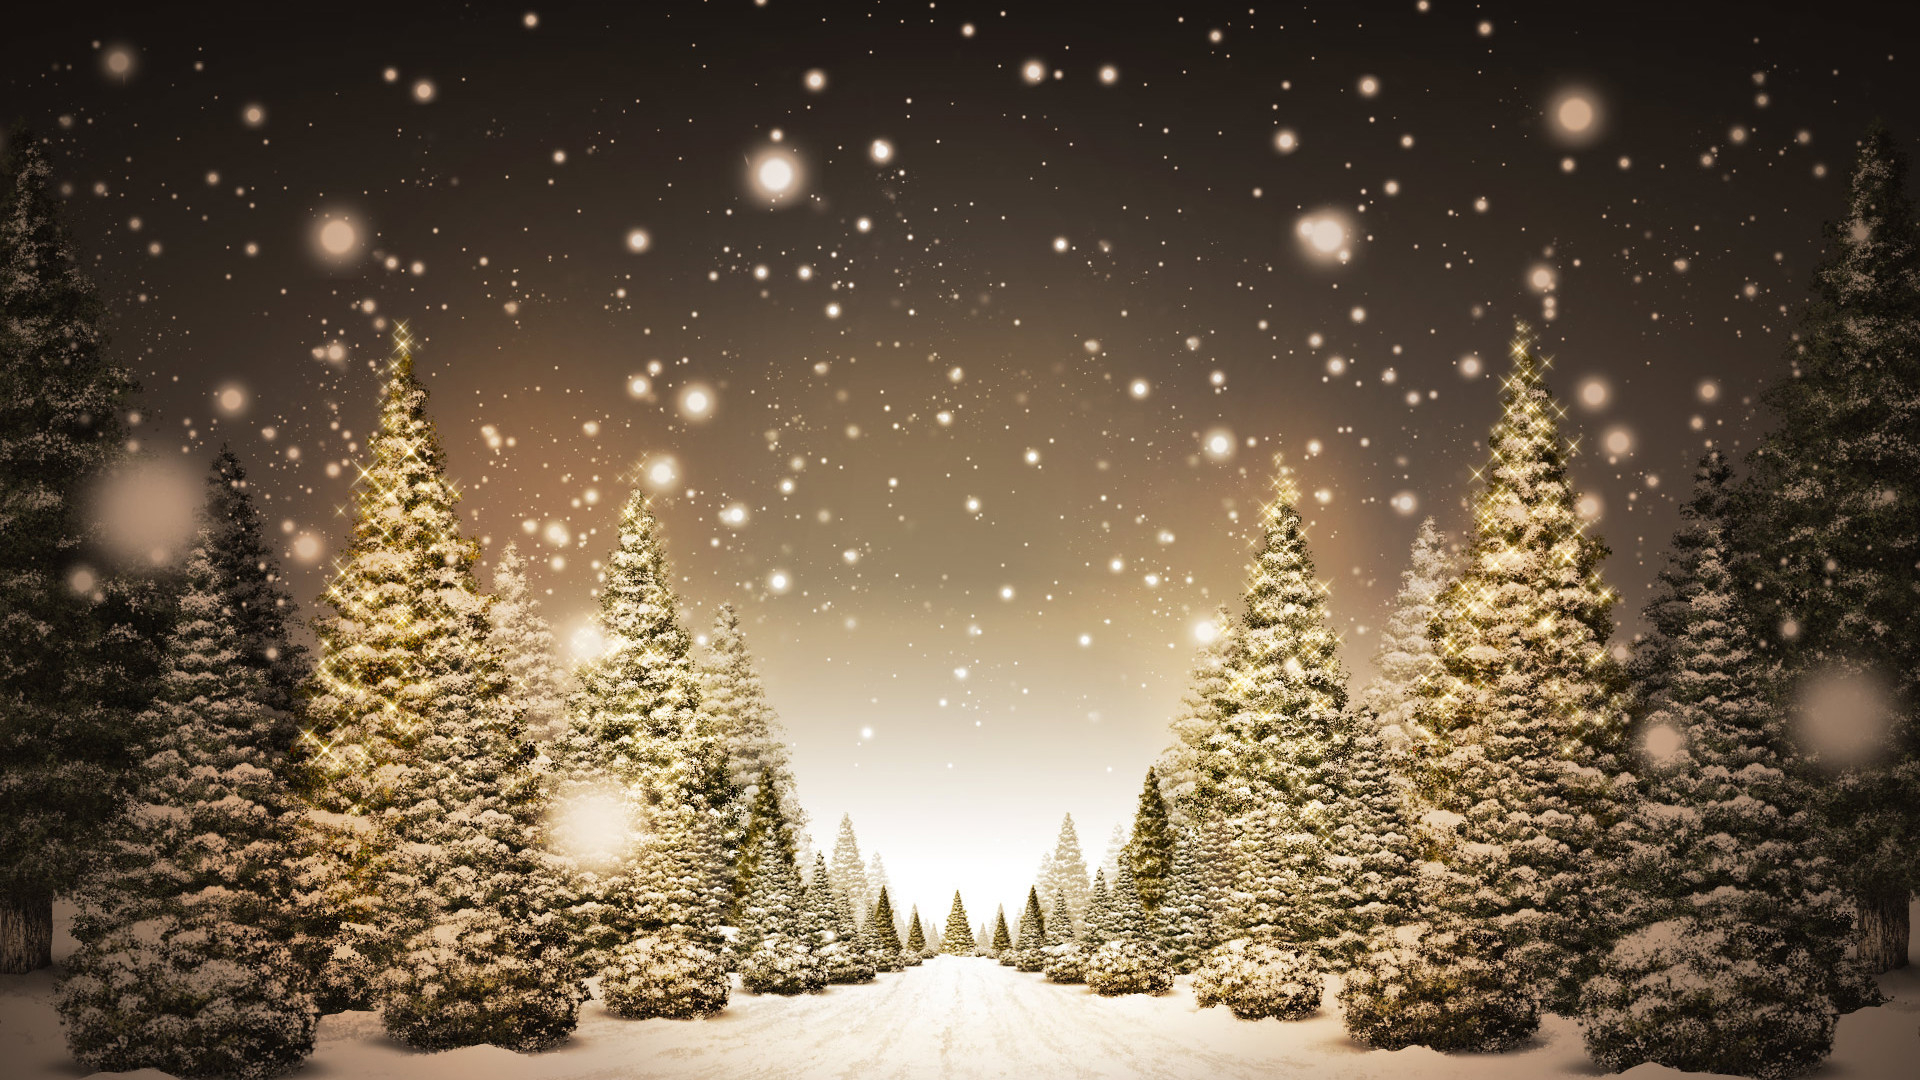 1920x1080 Christmas Trees in Snow HD Wallpaper. Â« Â»